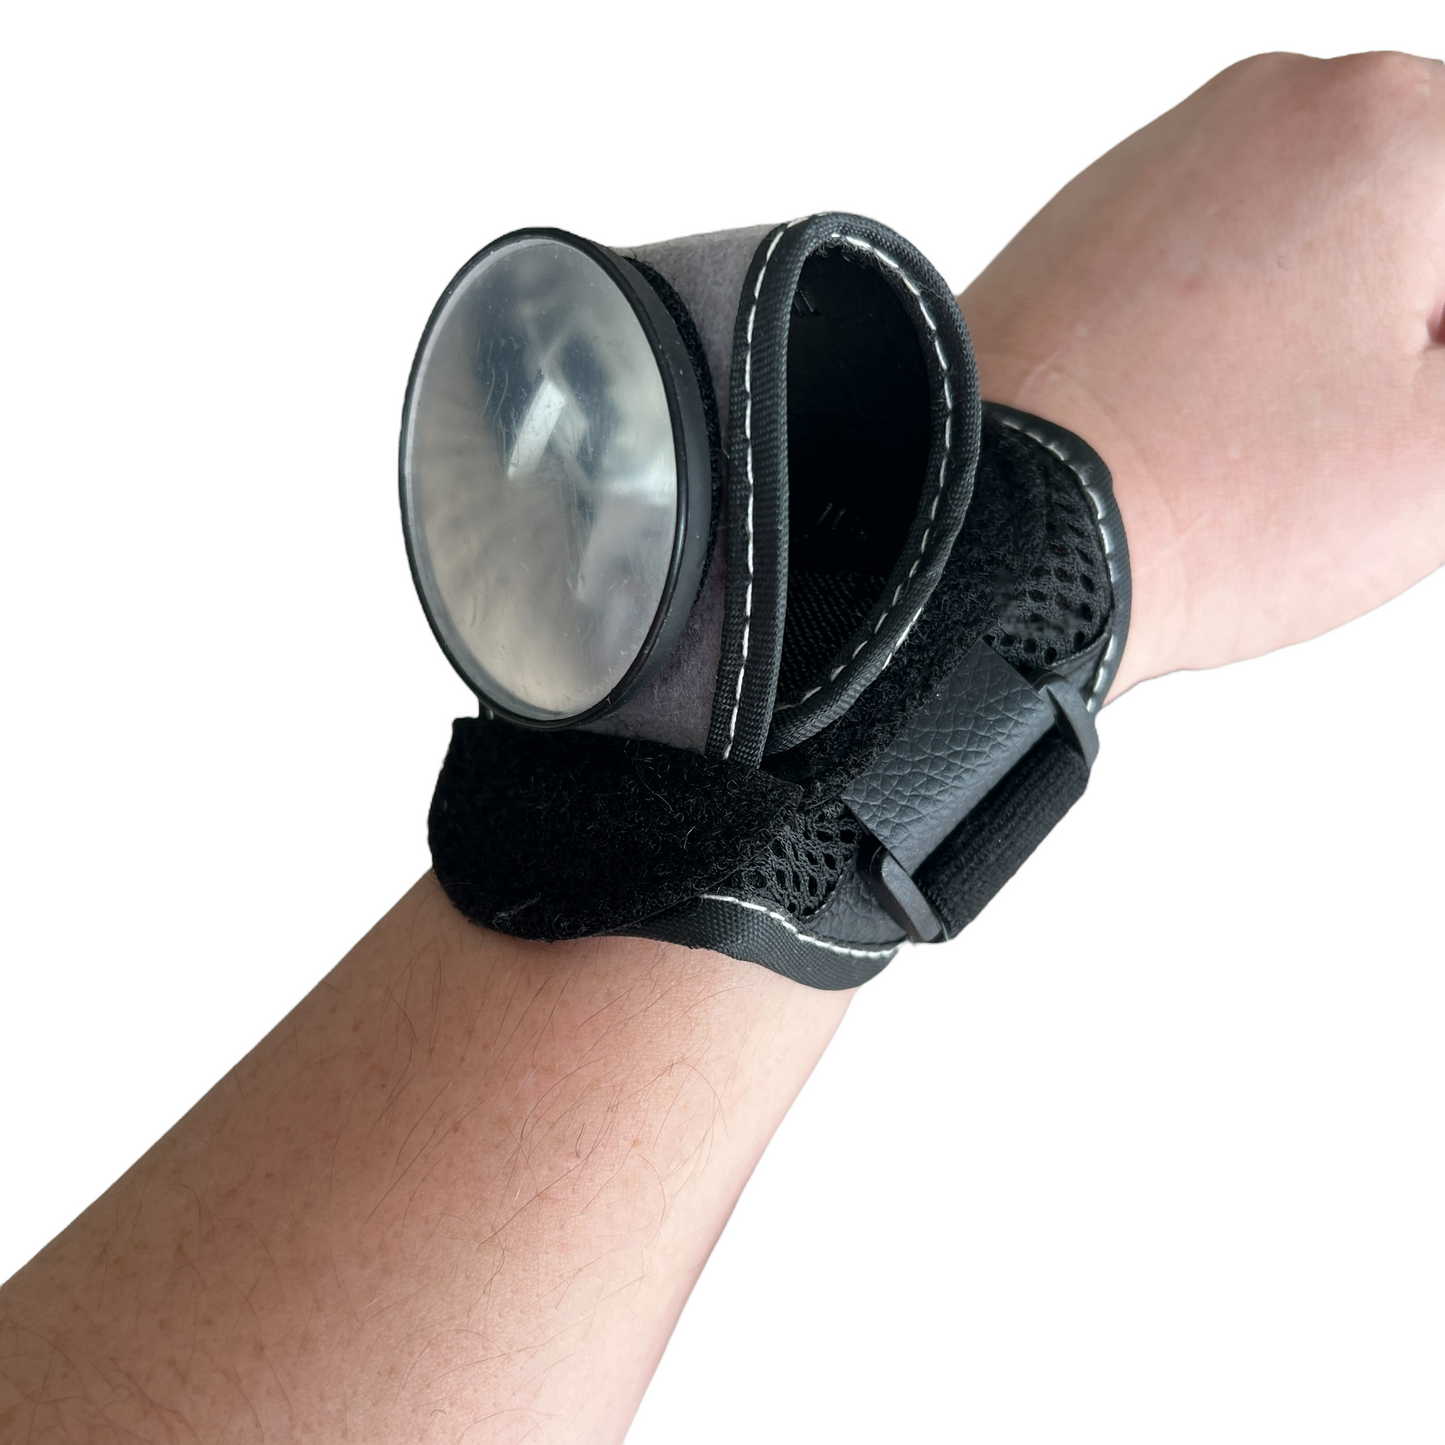 Reverse Mirror Wrist Strap Accessibility Equipment SPIRIT SPARKPLUGS   